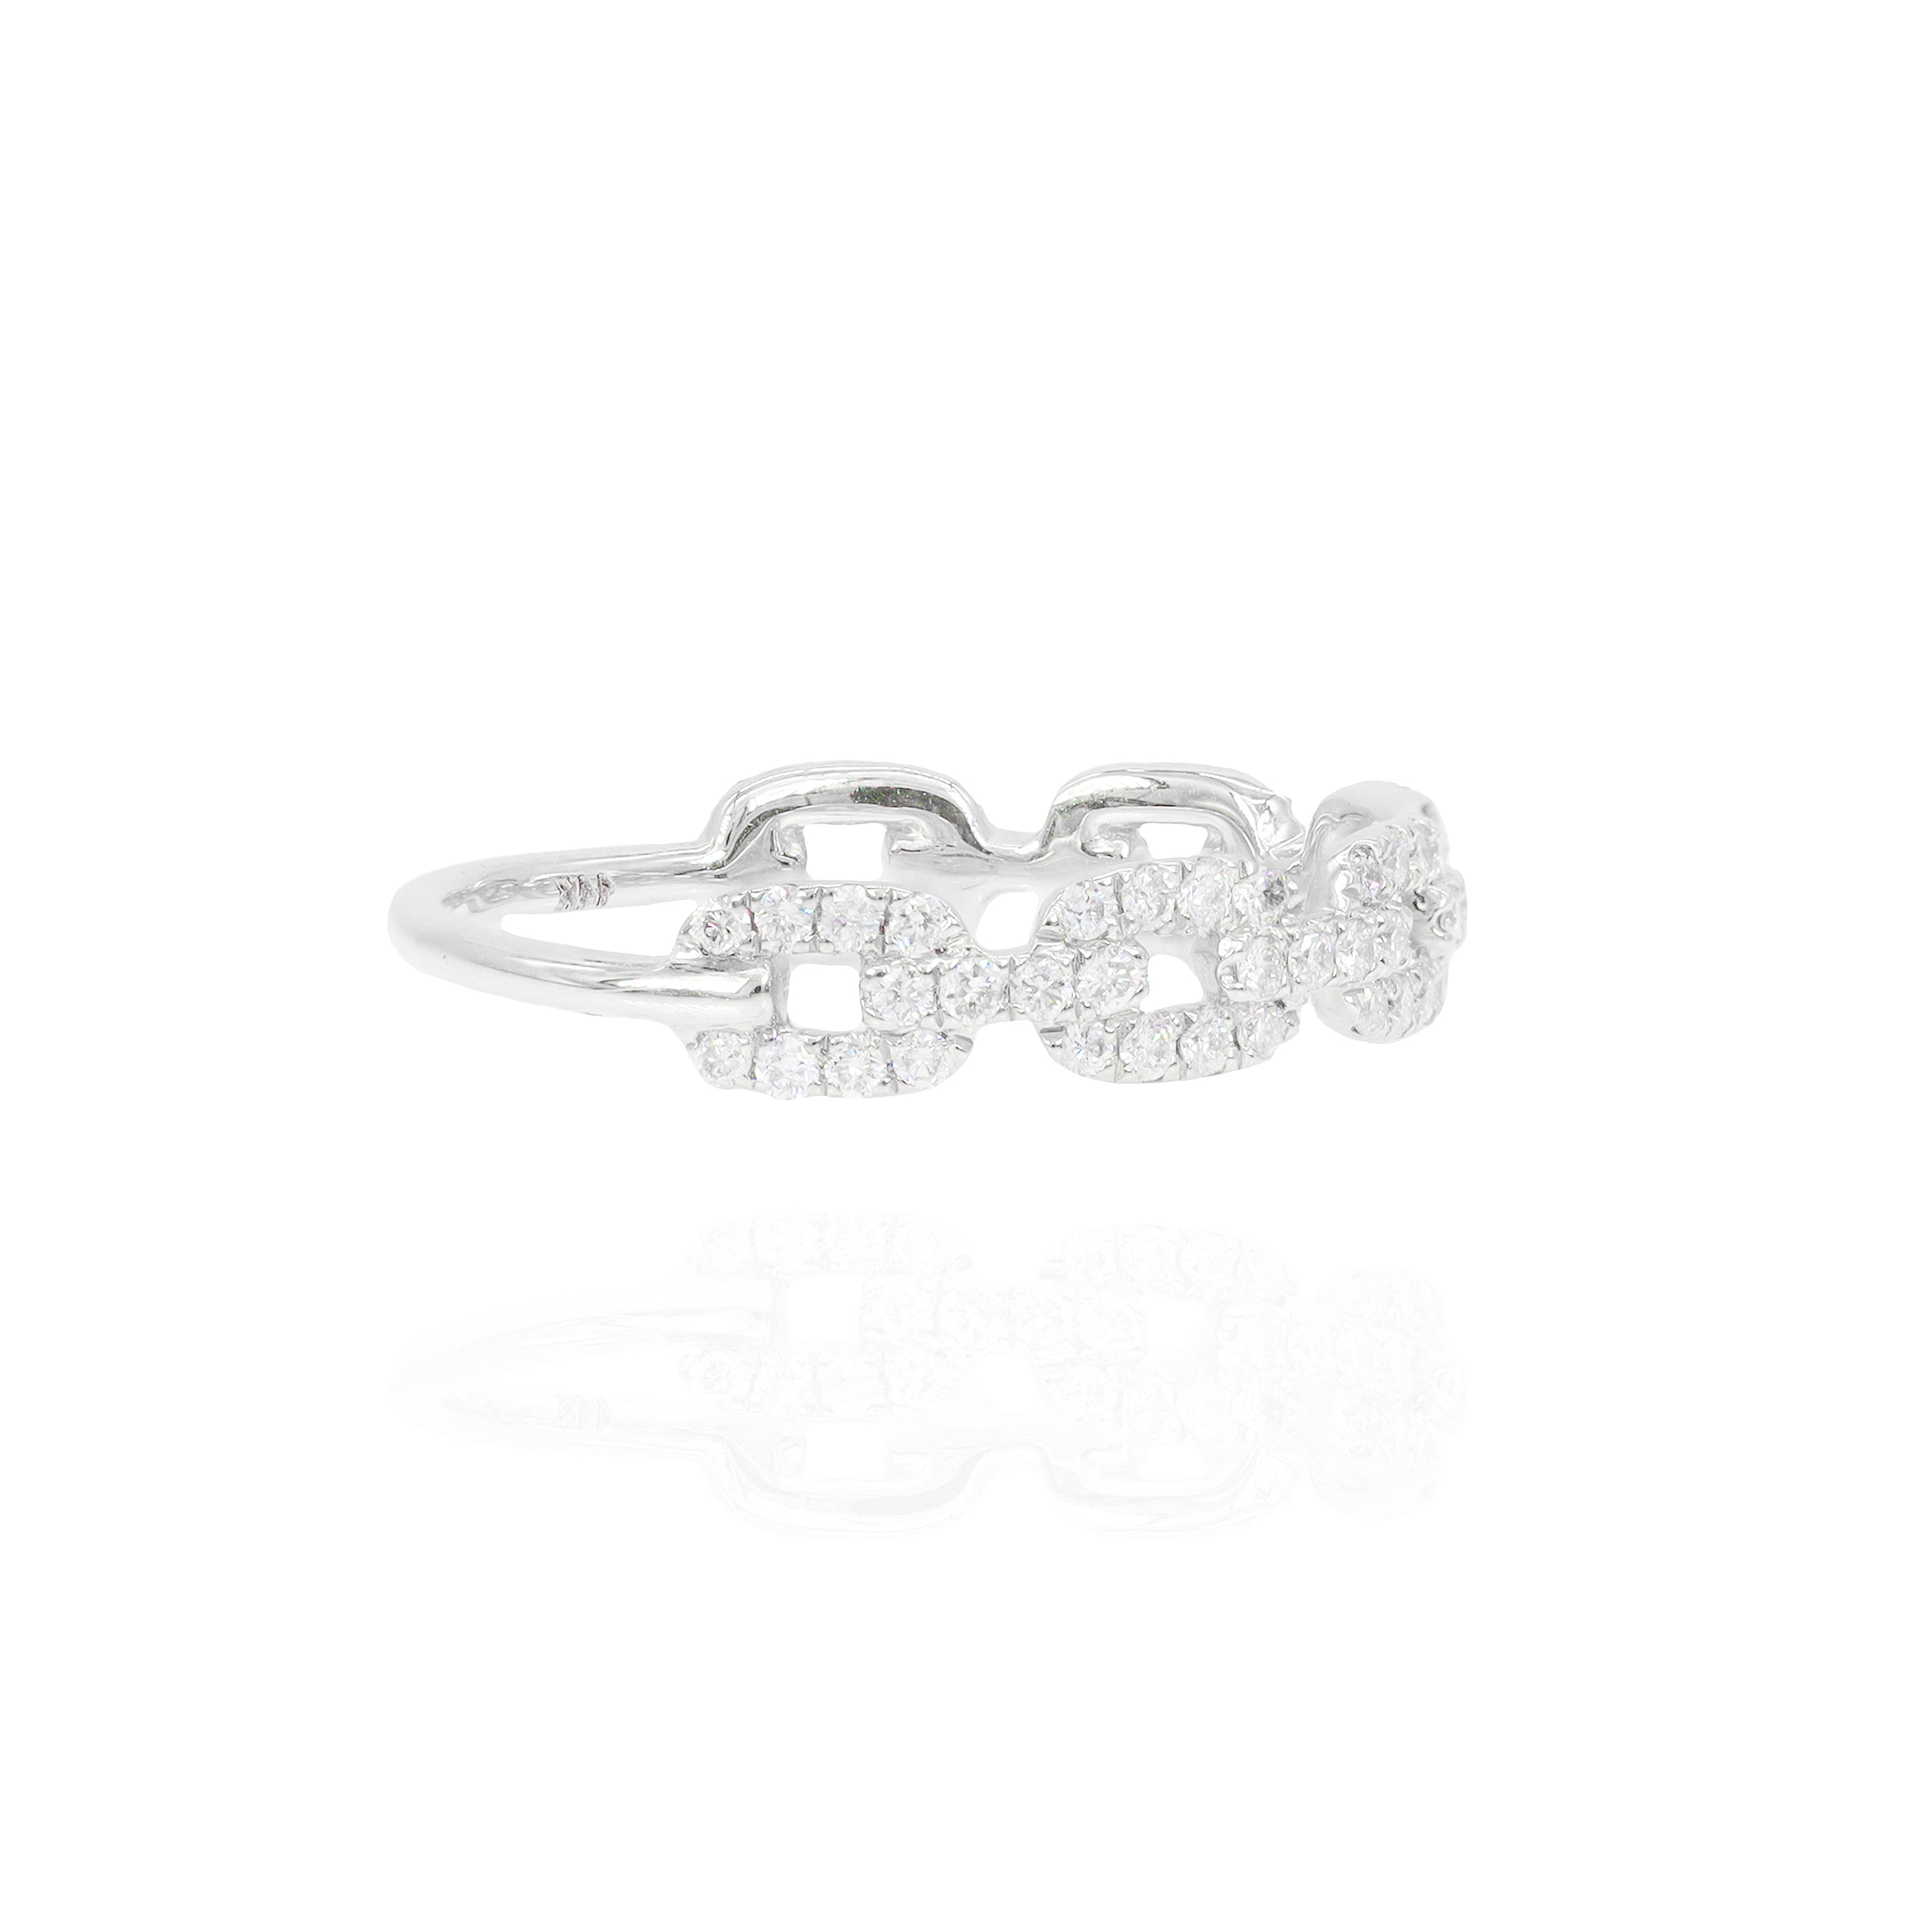 Small Hermes Diamond Ring